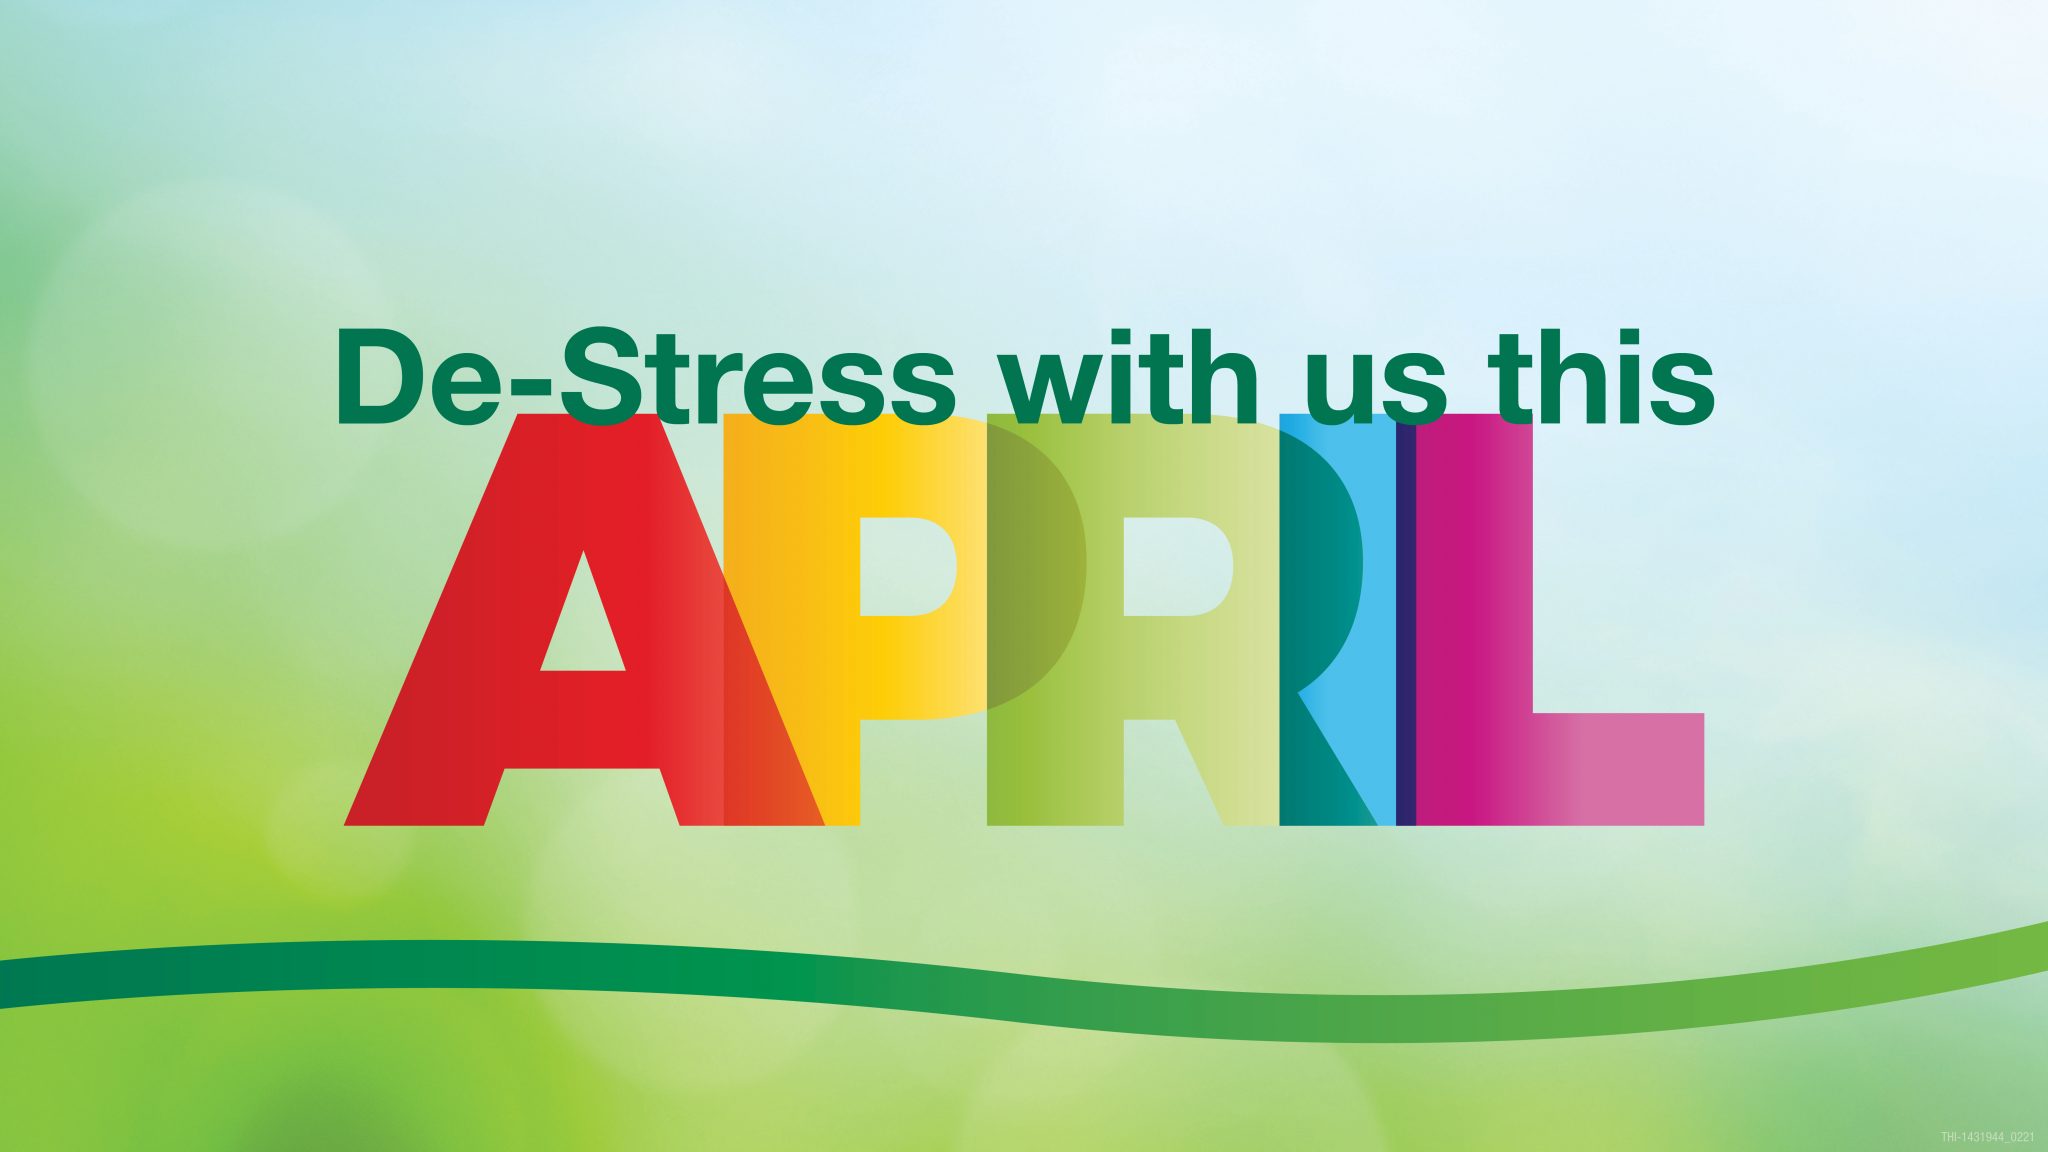 De-Stress with us this April!